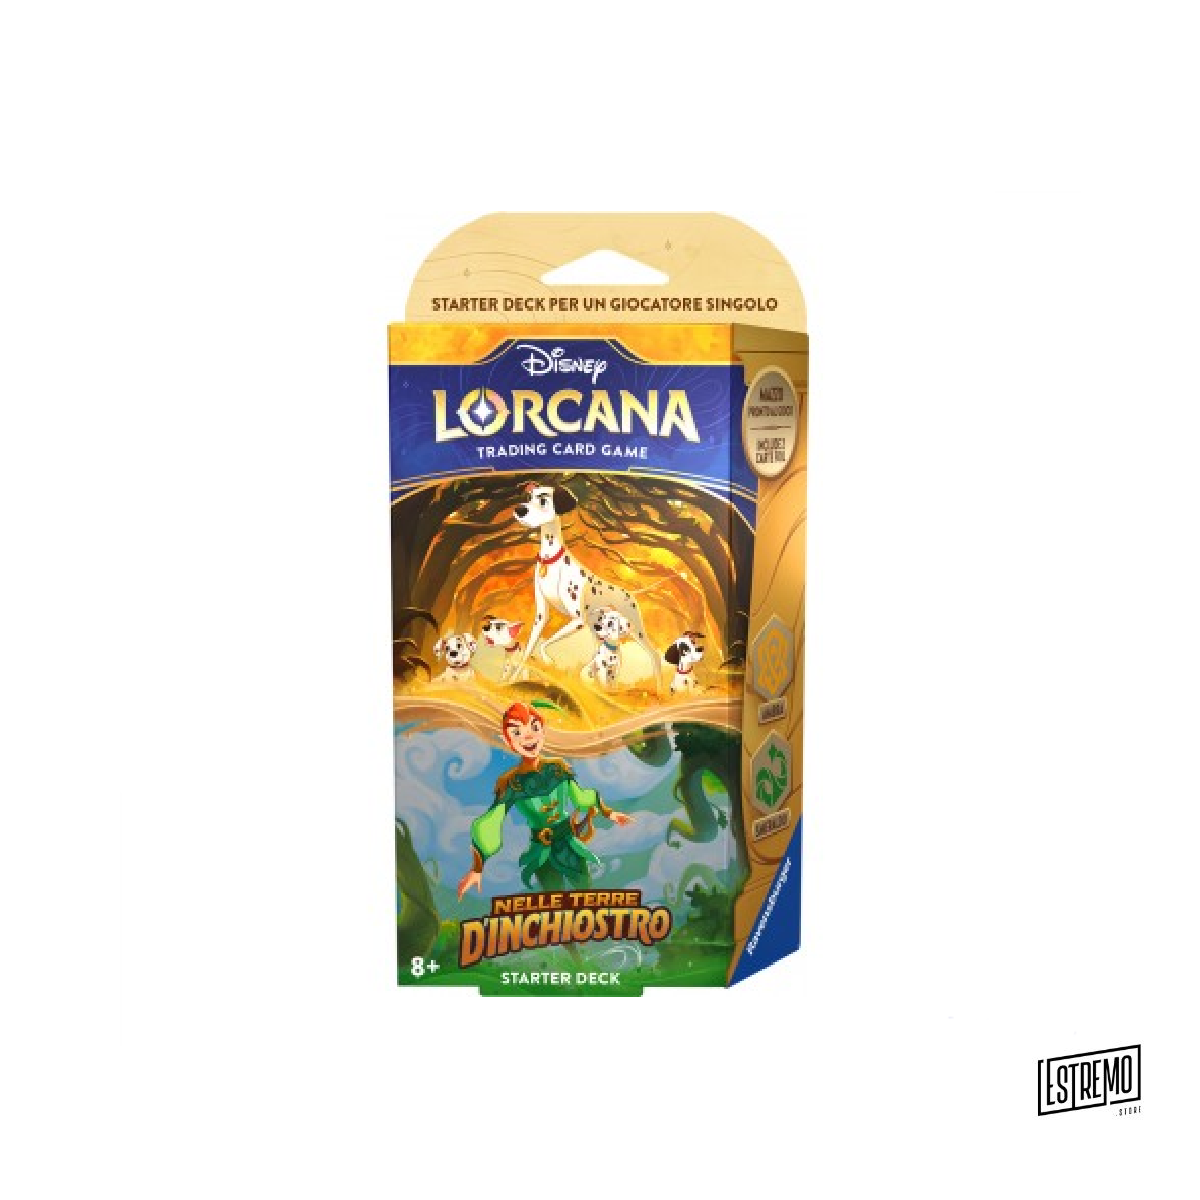 Starter Deck Ambra/Smeraldo – Pongo & Peter Pan – Nelle Terre d’Inchiostro – Lorcana TCG Disney – ITA